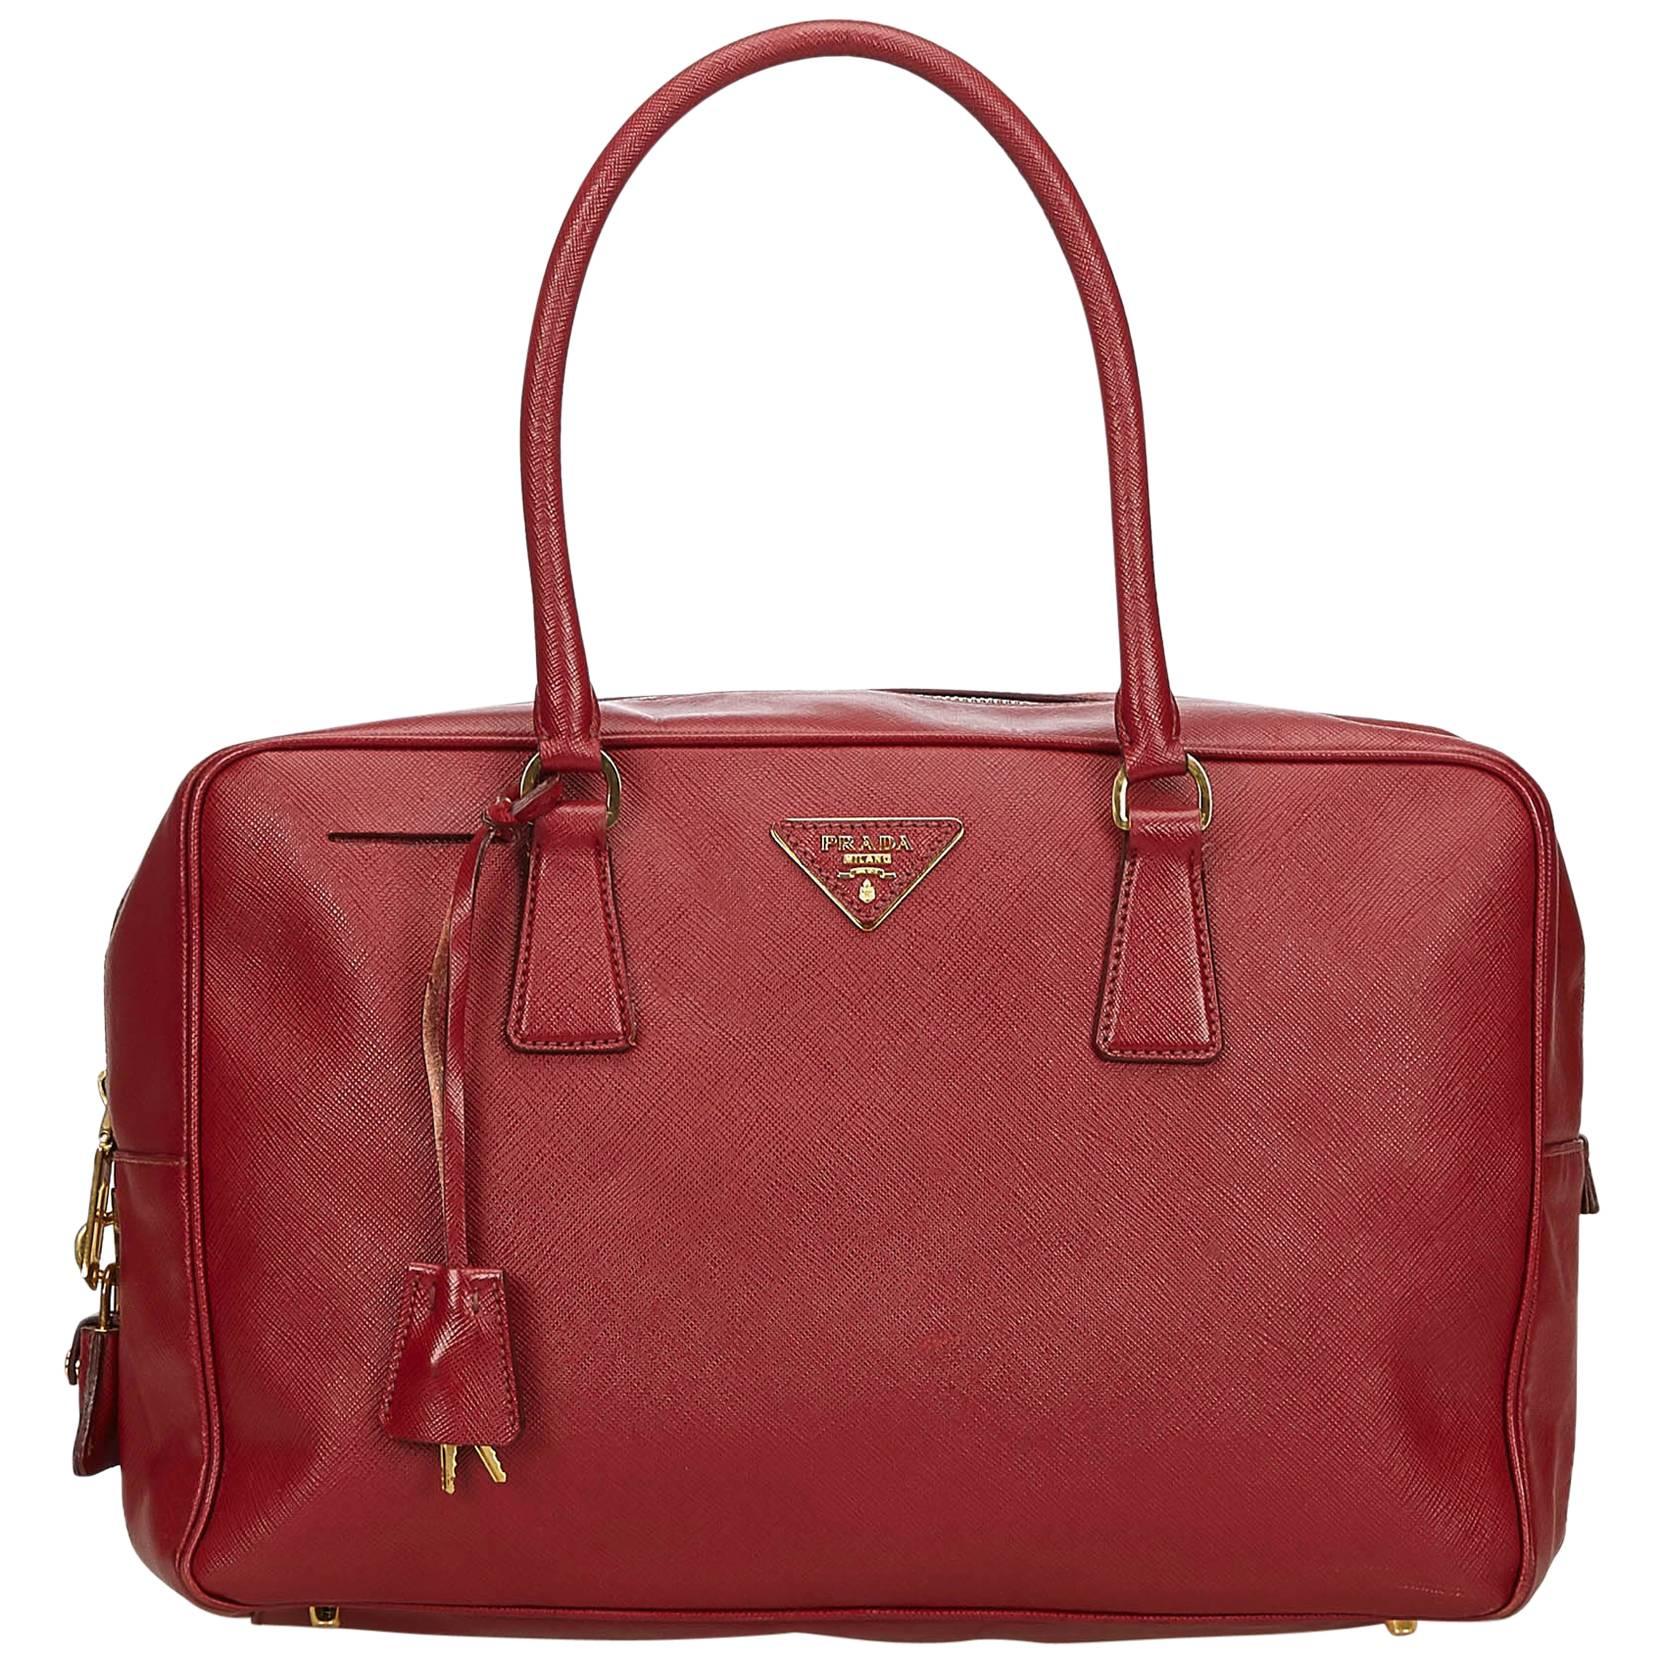 Prada Red Leather Handbag